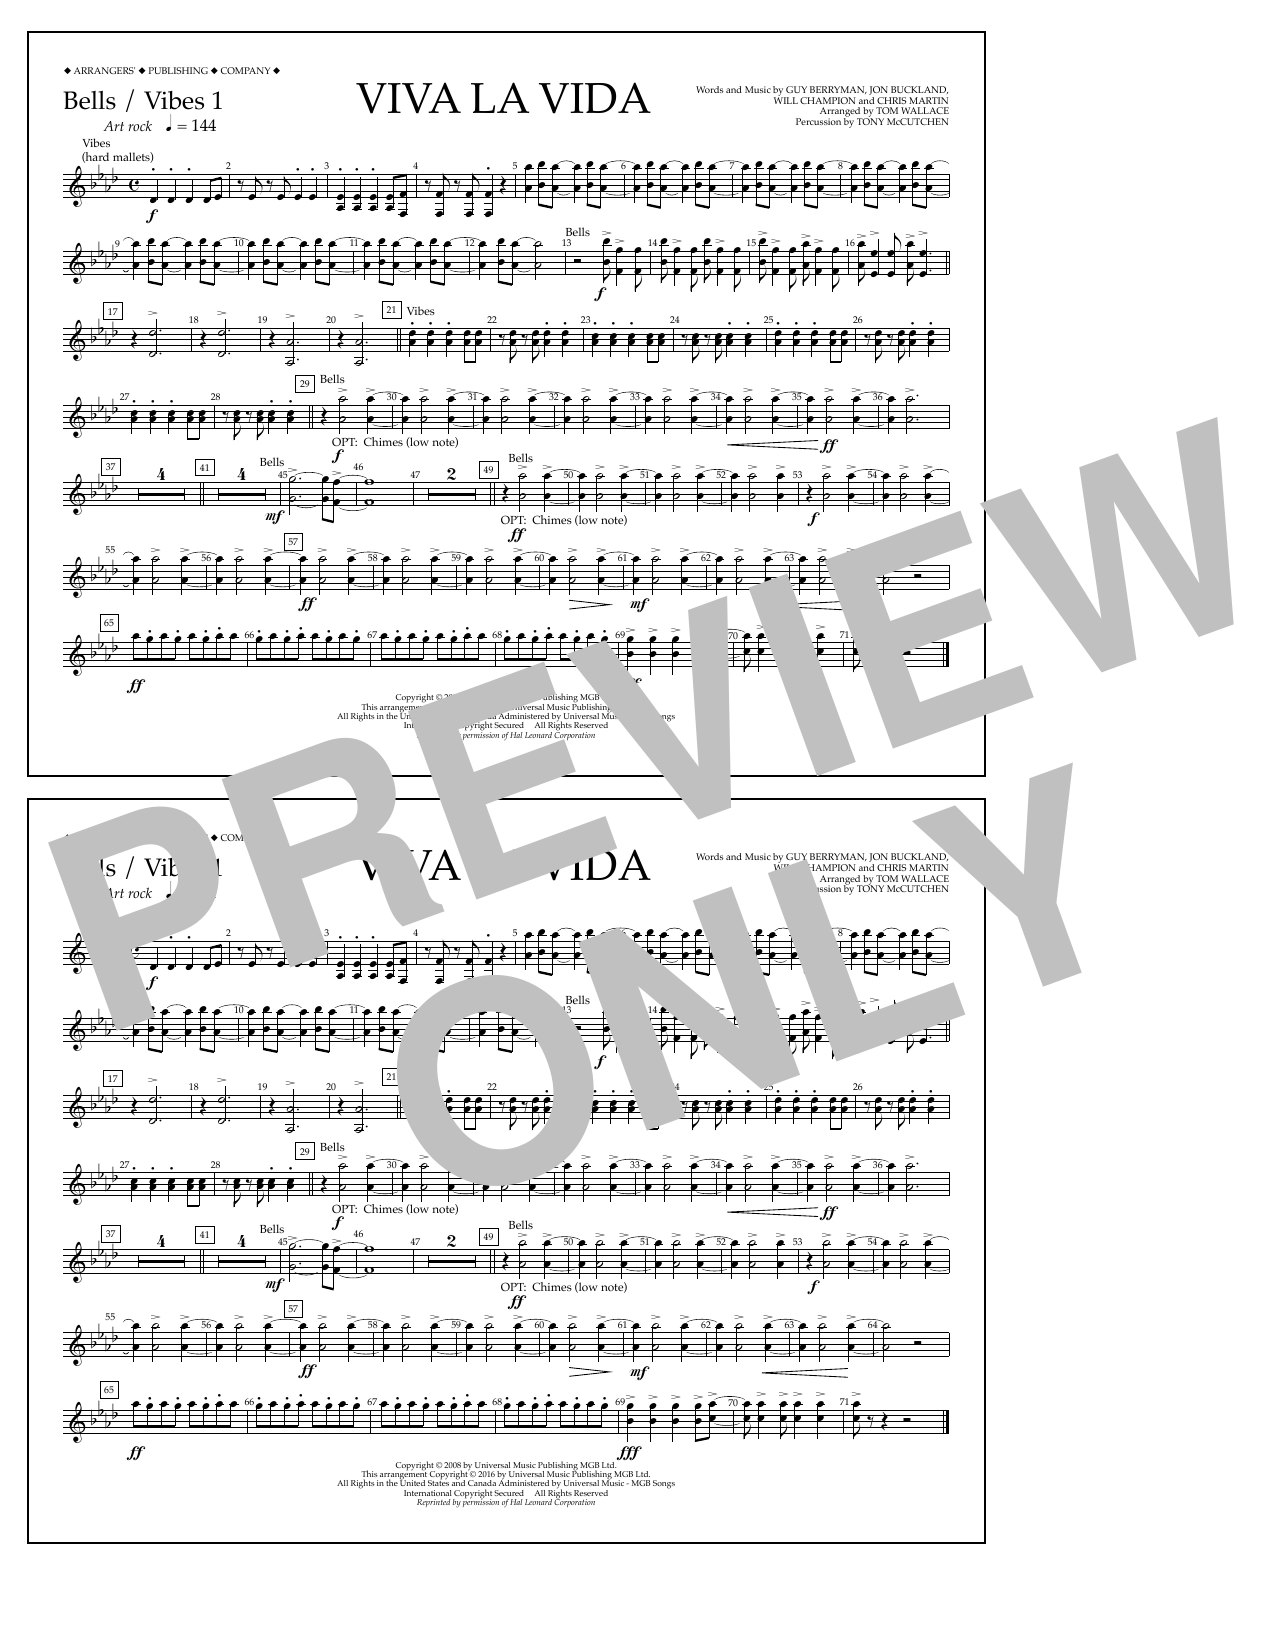 Tom Wallace Viva La Vida - Bells/Vibes 1 Sheet Music Notes & Chords for Marching Band - Download or Print PDF